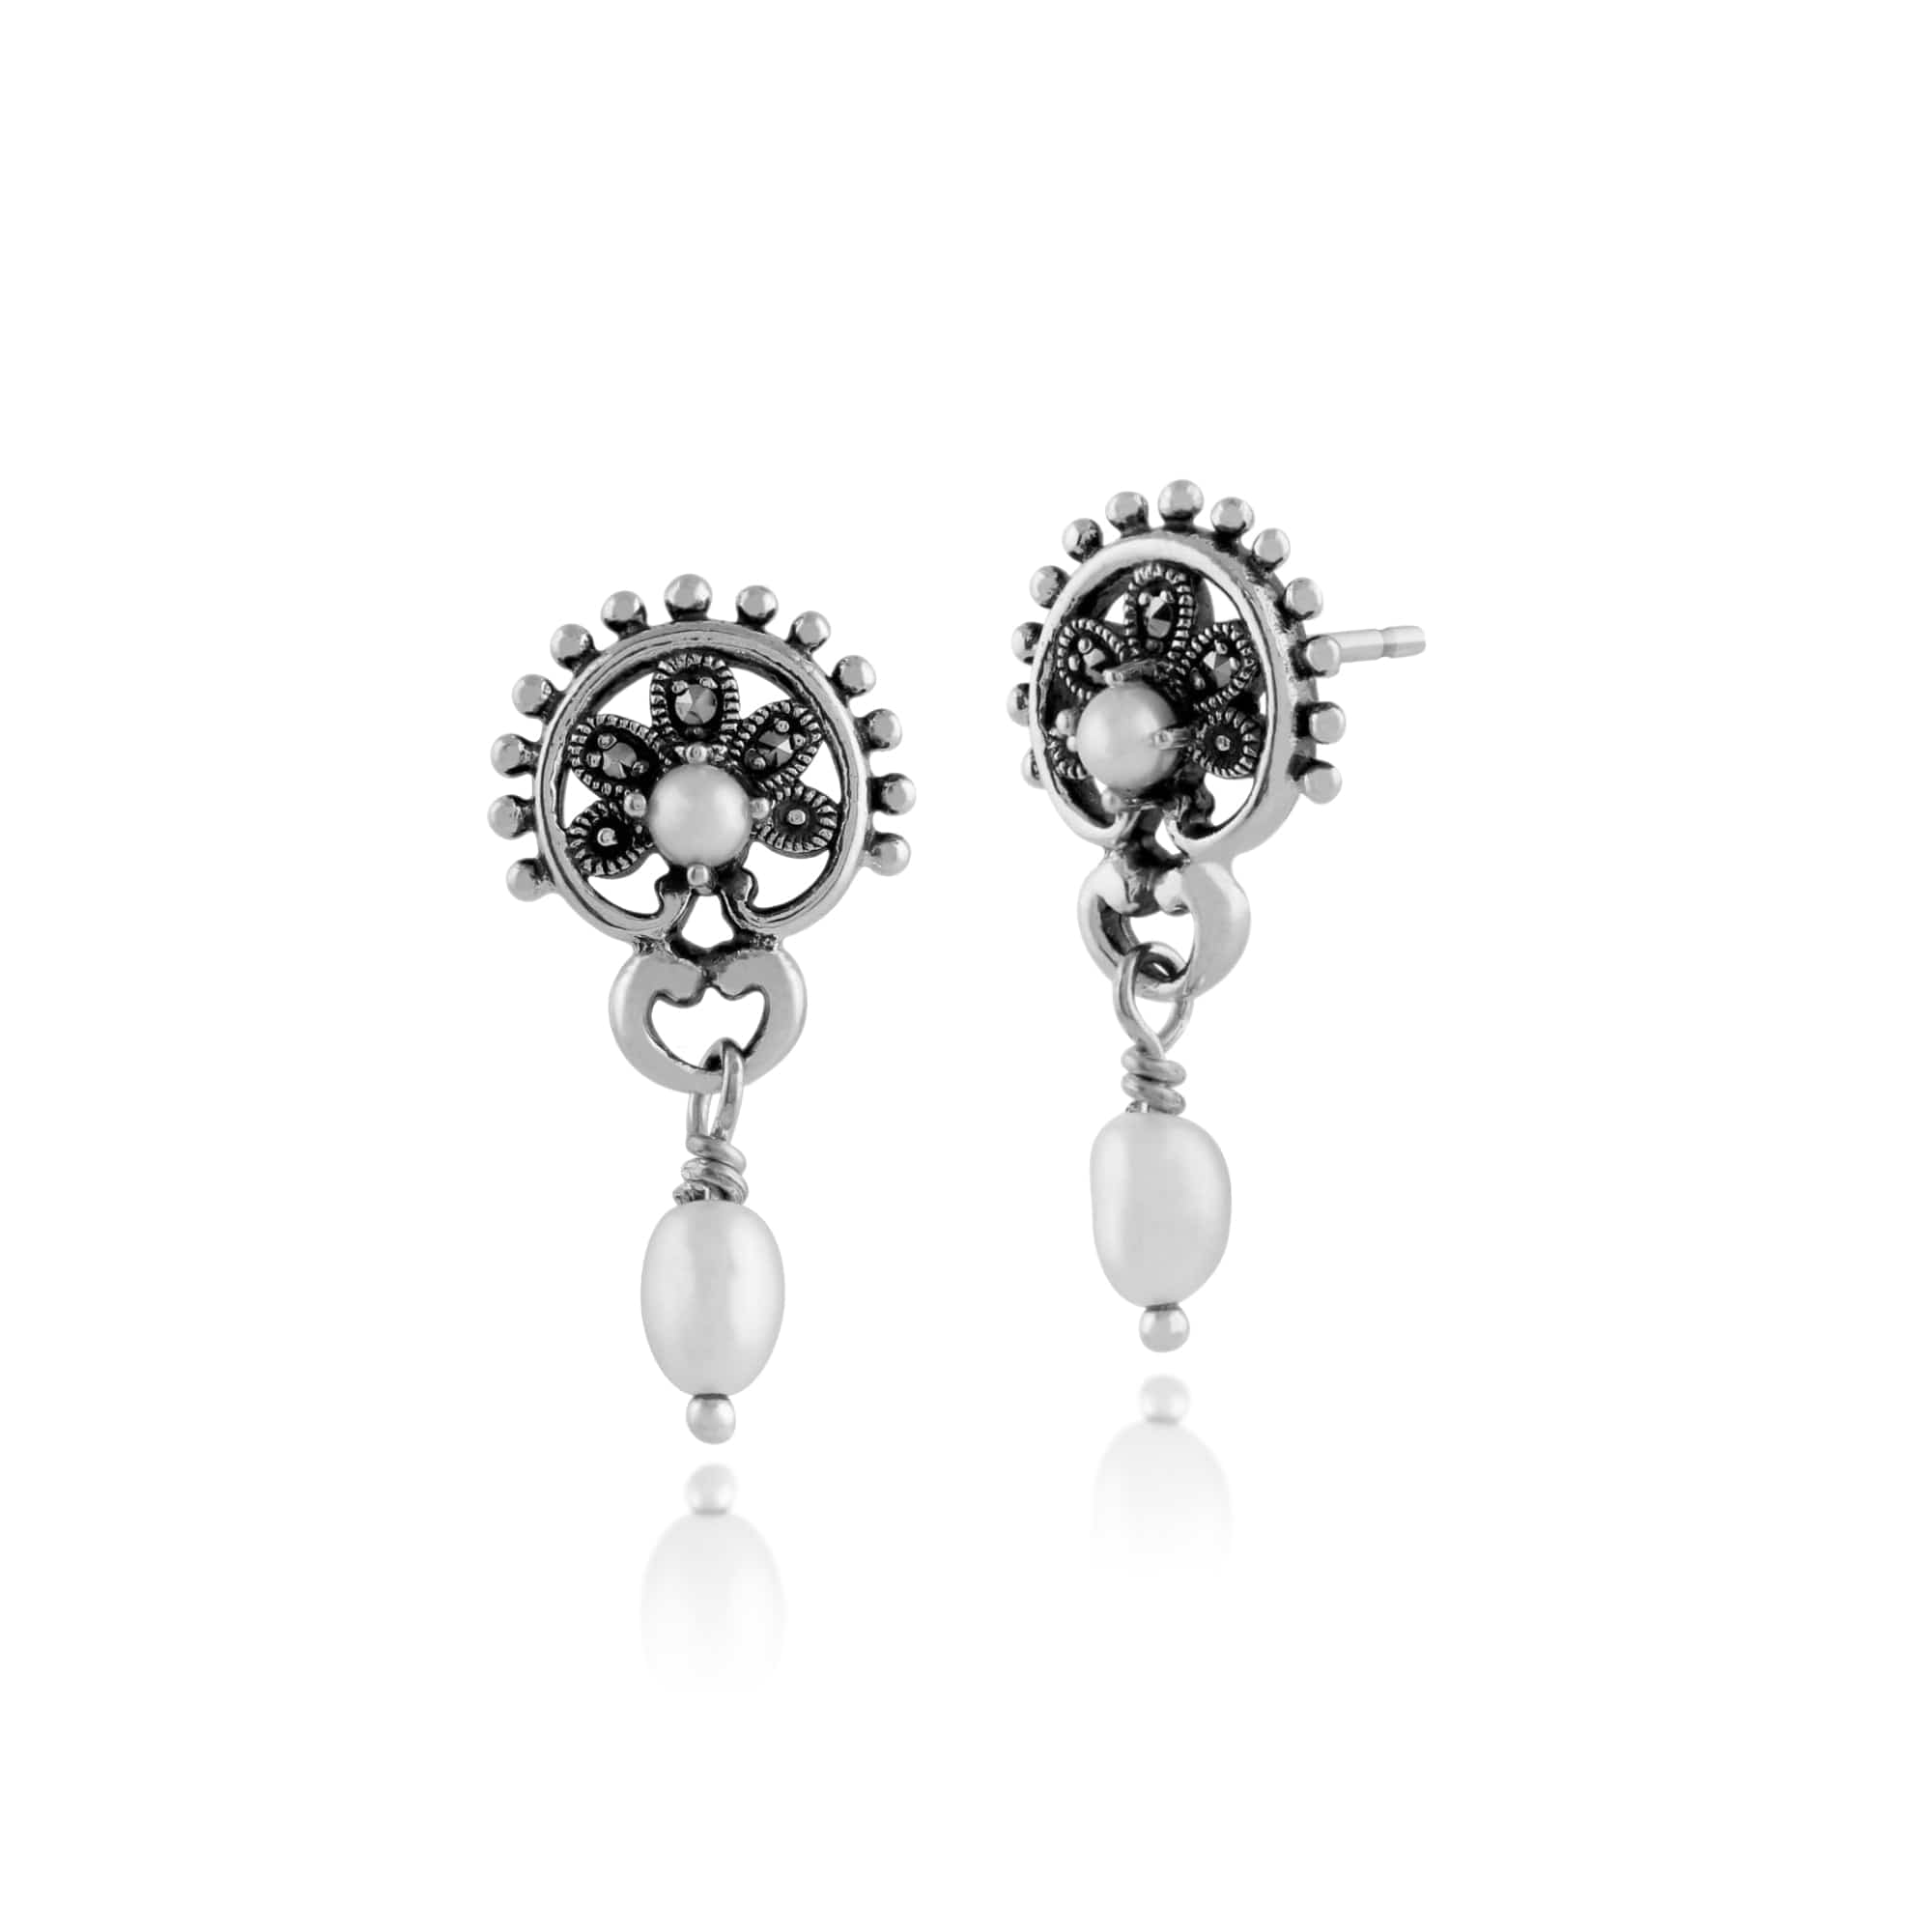 Floral Round Freshwater Pearl & Marcasite Drop Earrings in 925 Sterling Silver - Gemondo